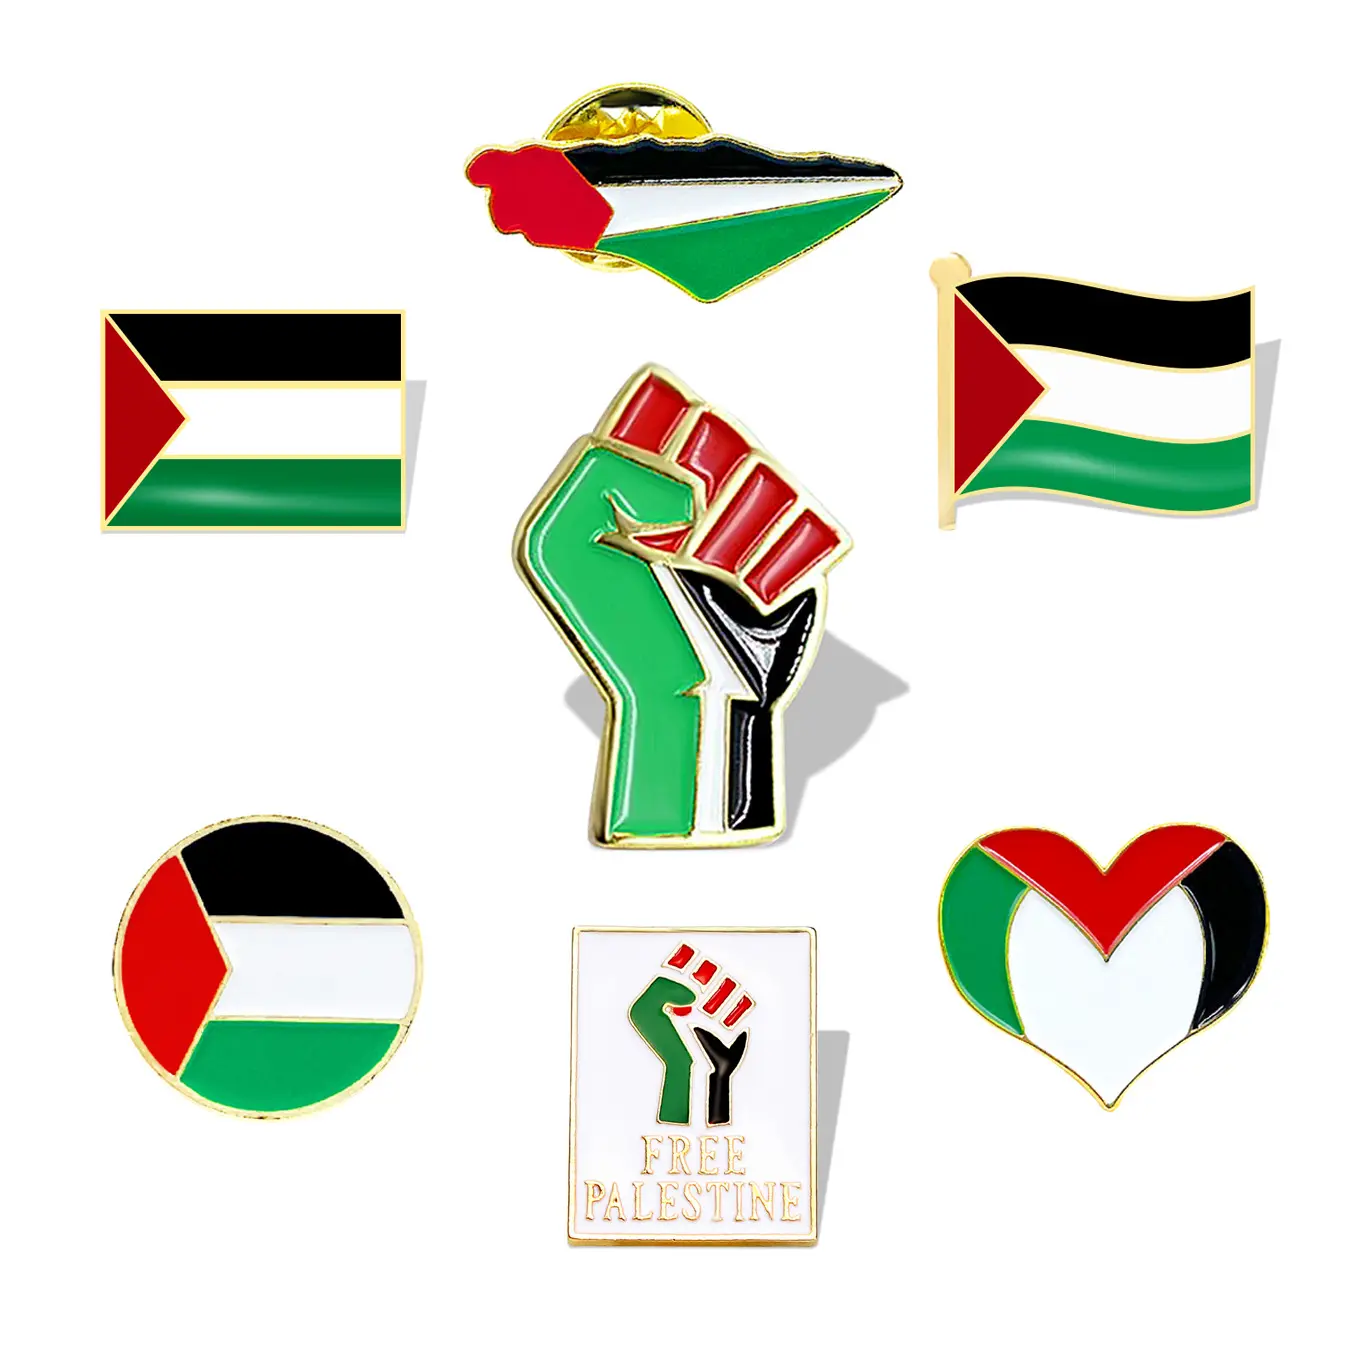 फ़िलिस्तीन फ़िलिस्तीन मुट्ठी पिन बैज लैपल - फ़िलिस्तीन राष्ट्रीय तामचीनी बैज फ़िलिस्तीन फ़िलिस्तीन ध्वज धातु बटन बैज पिन